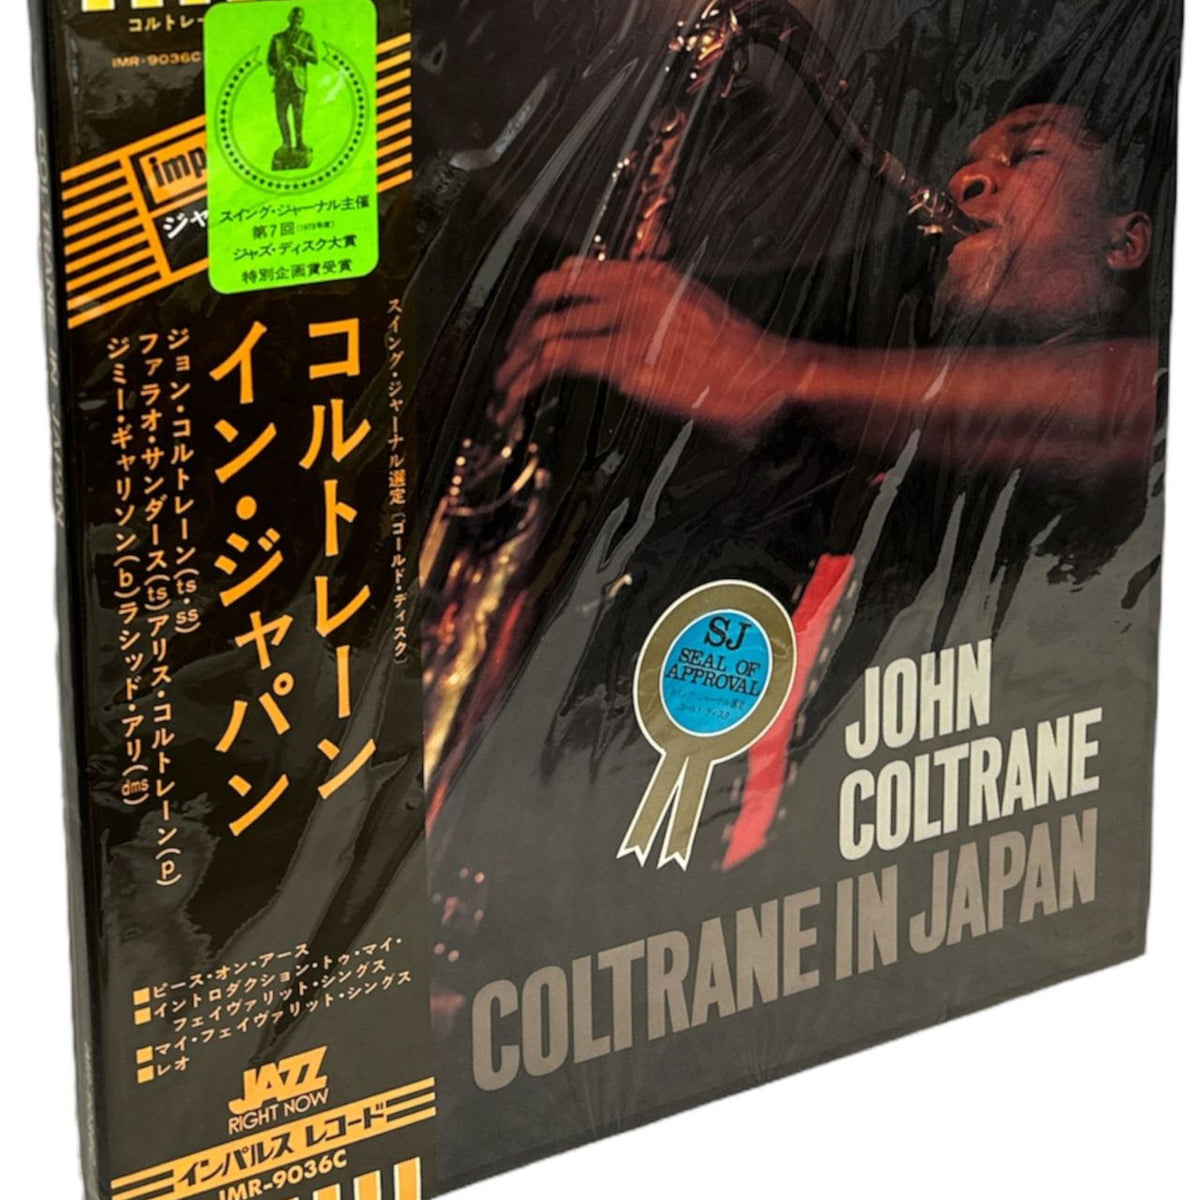 John Coltrane Coltrane In Japan + Award Stickered Obi Japanese Vinyl box set